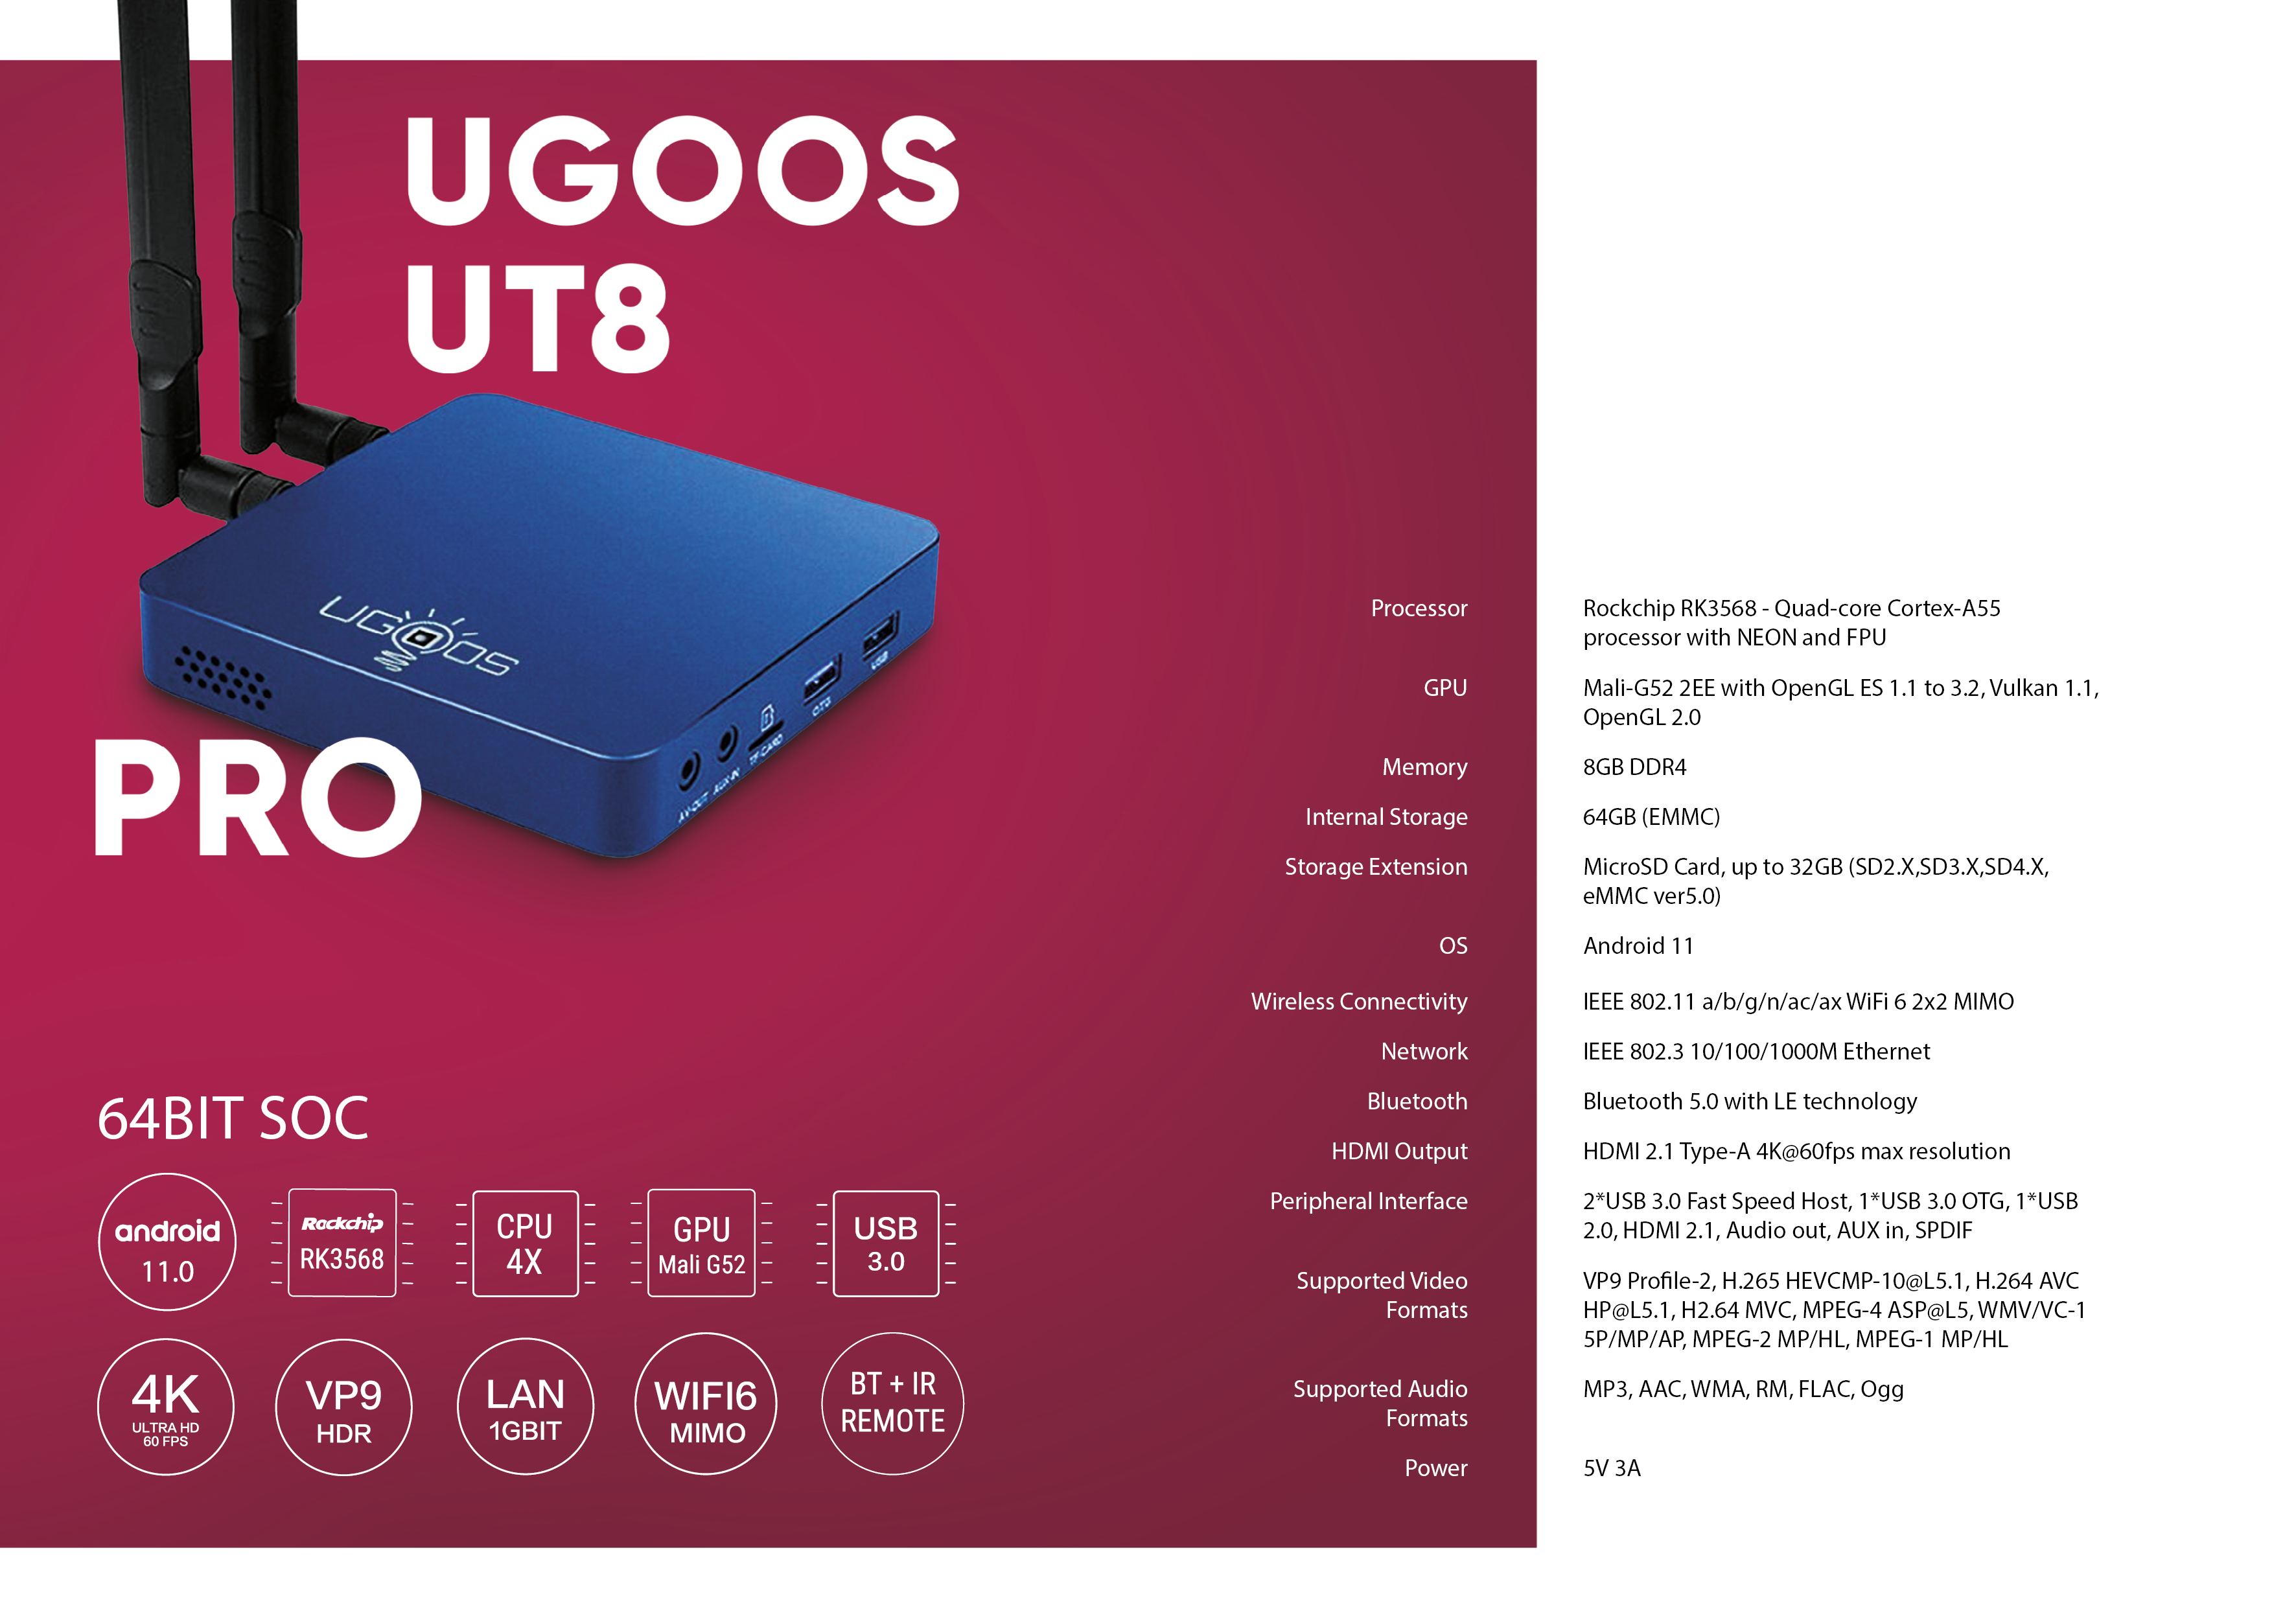 Ugoos UT8 Pro